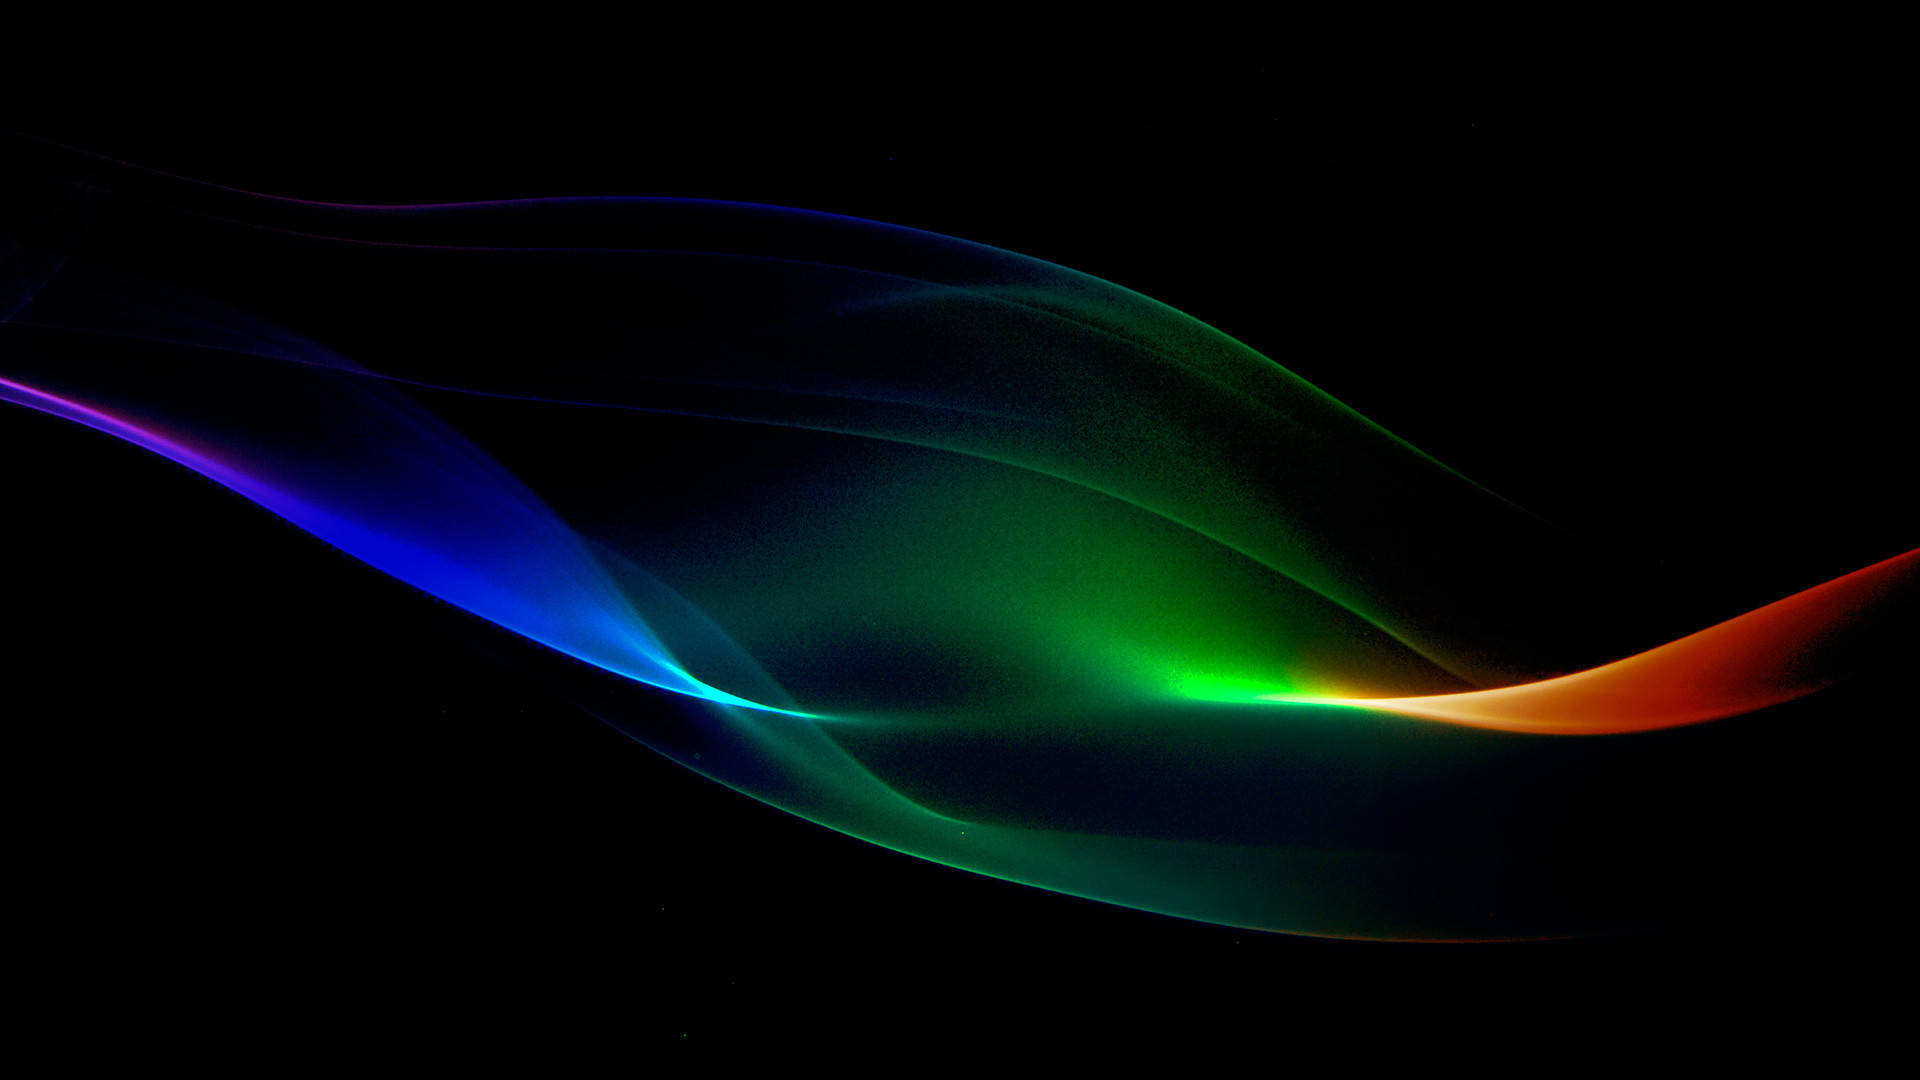 Abstract Waves Of Light On Black Desktop Background